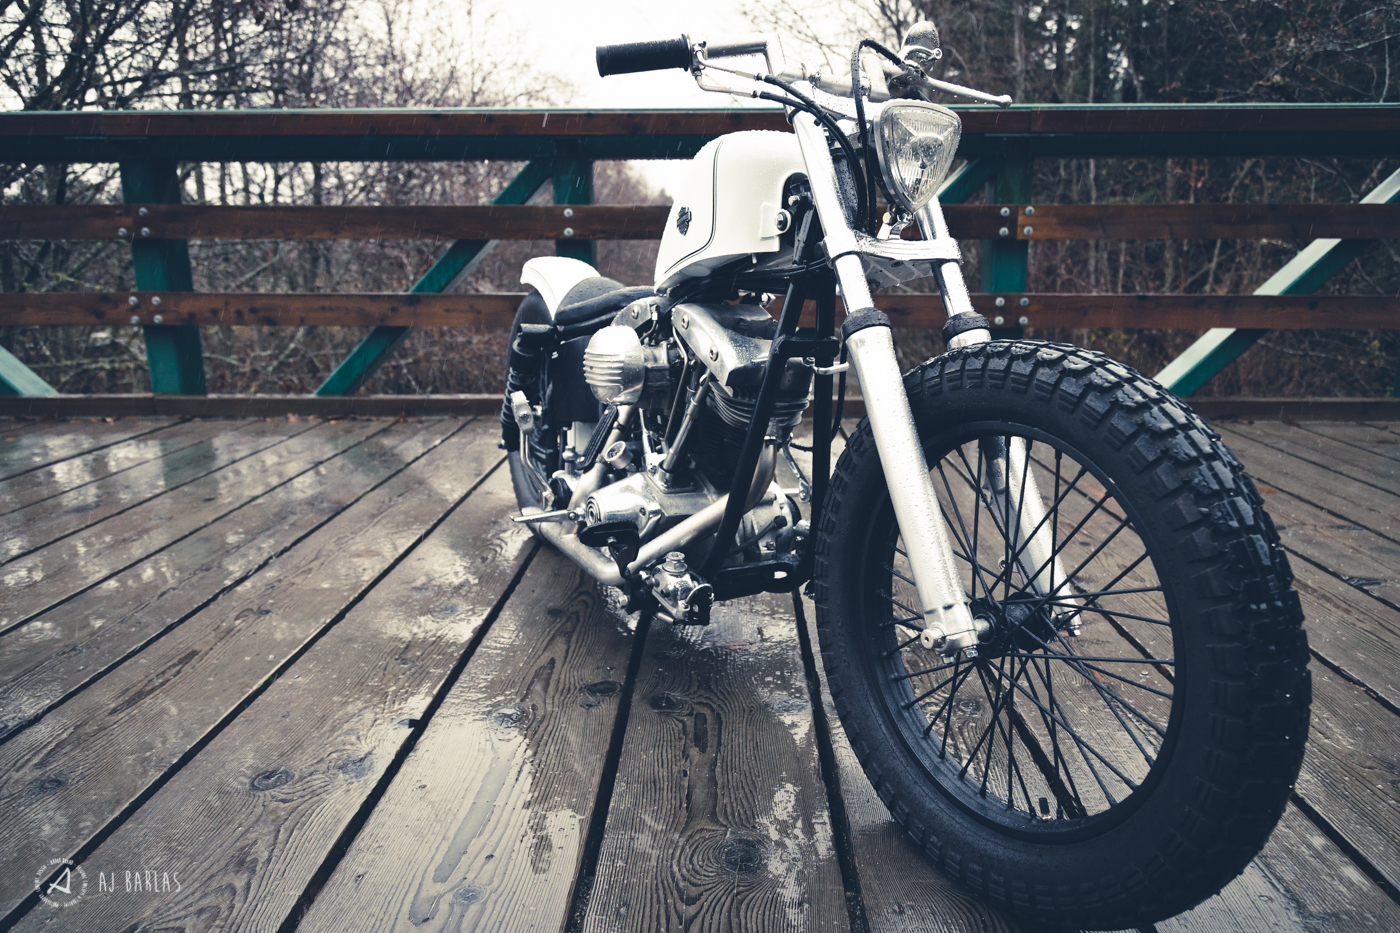 Todd Schumlick's custom 1975 Harley Davidson Period Incorrect Shovelhead